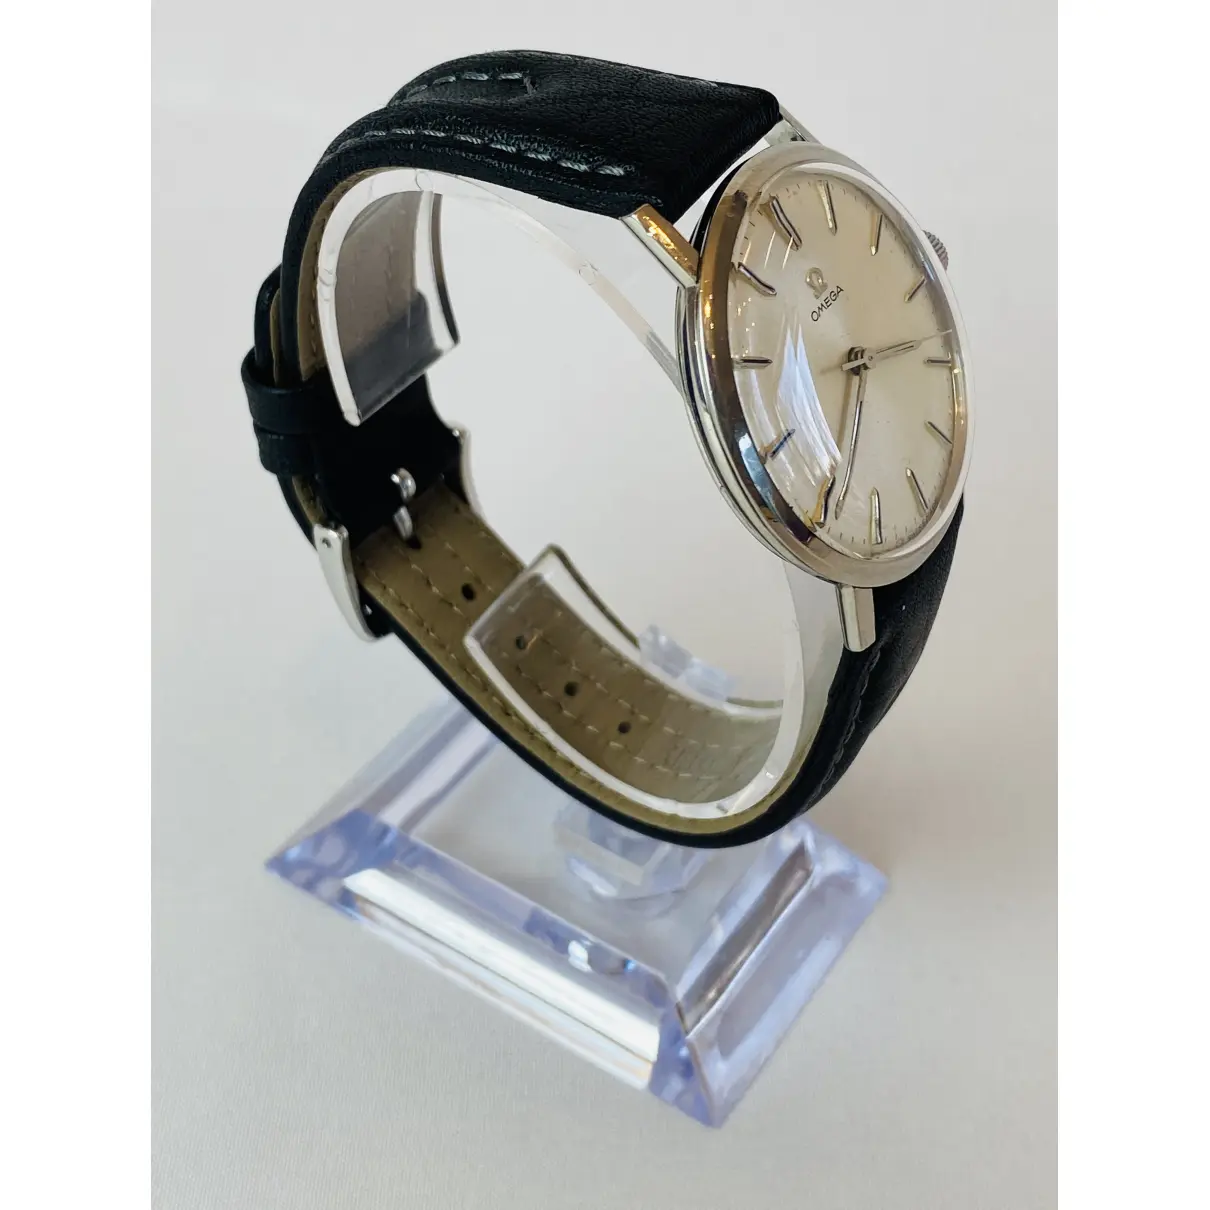 Buy Omega Watch online - Vintage